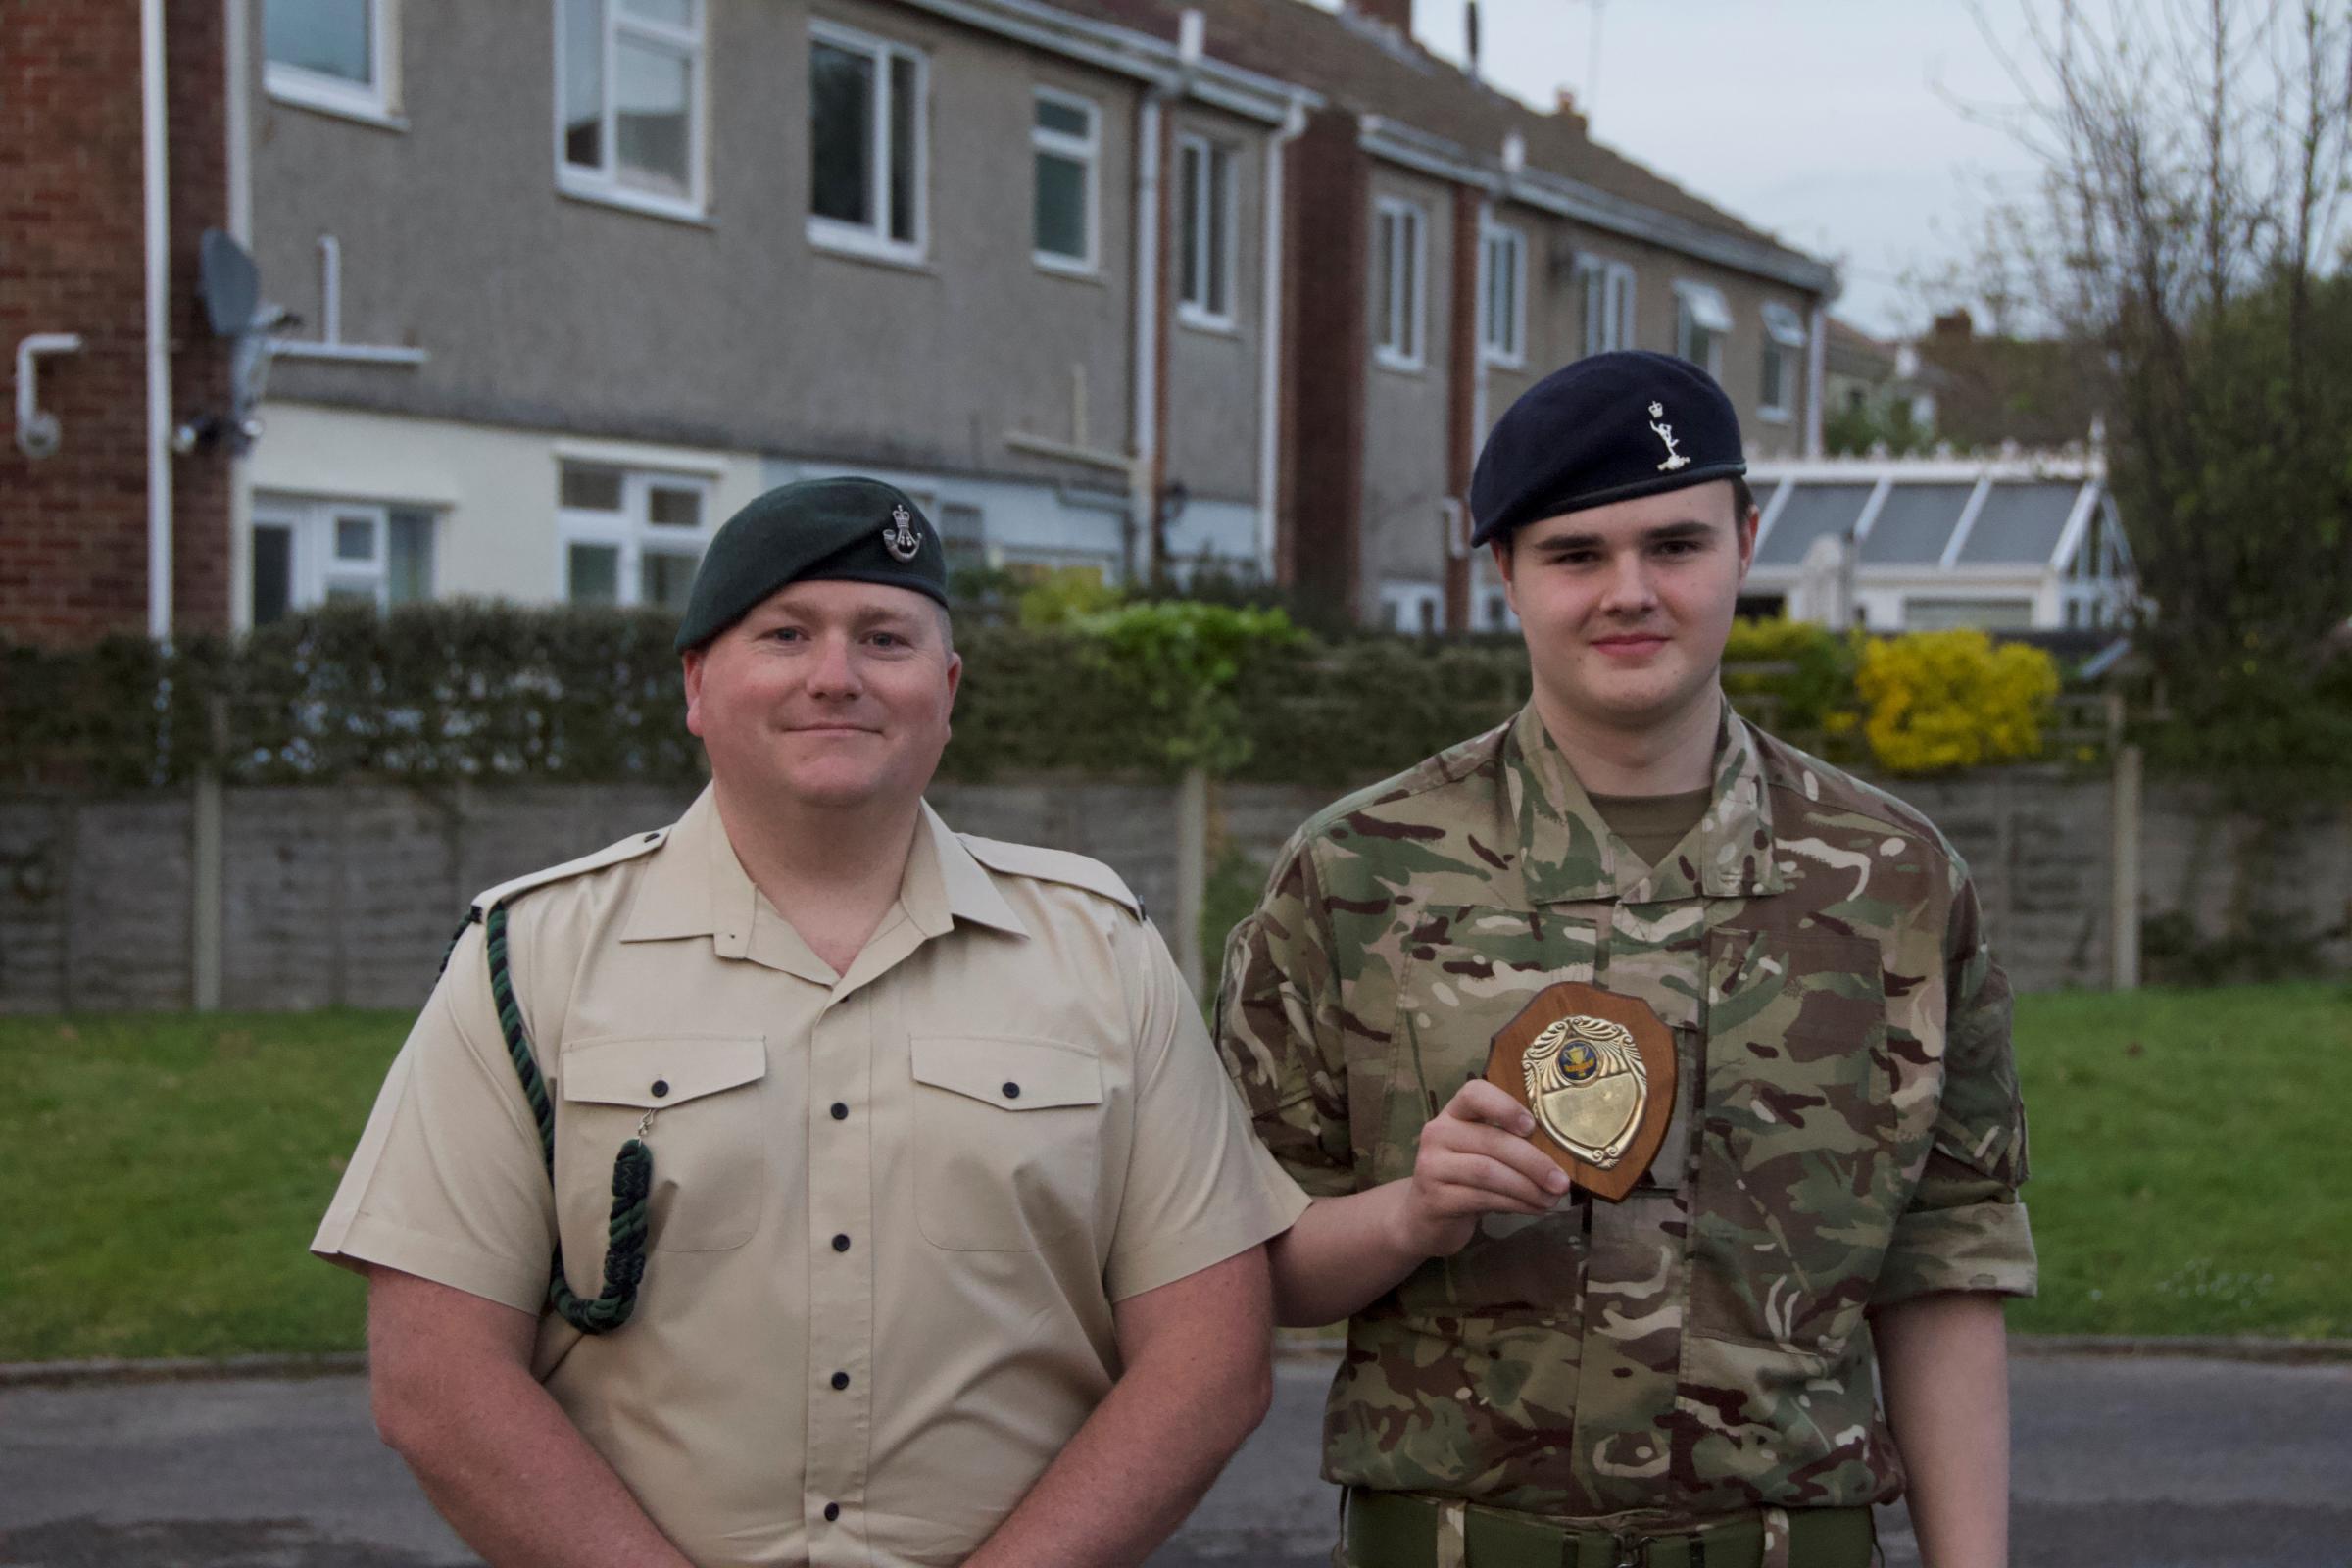 Bristol RSM Steve Hoydan with Cadet of the Month (Best Cadet) Cdt Horder